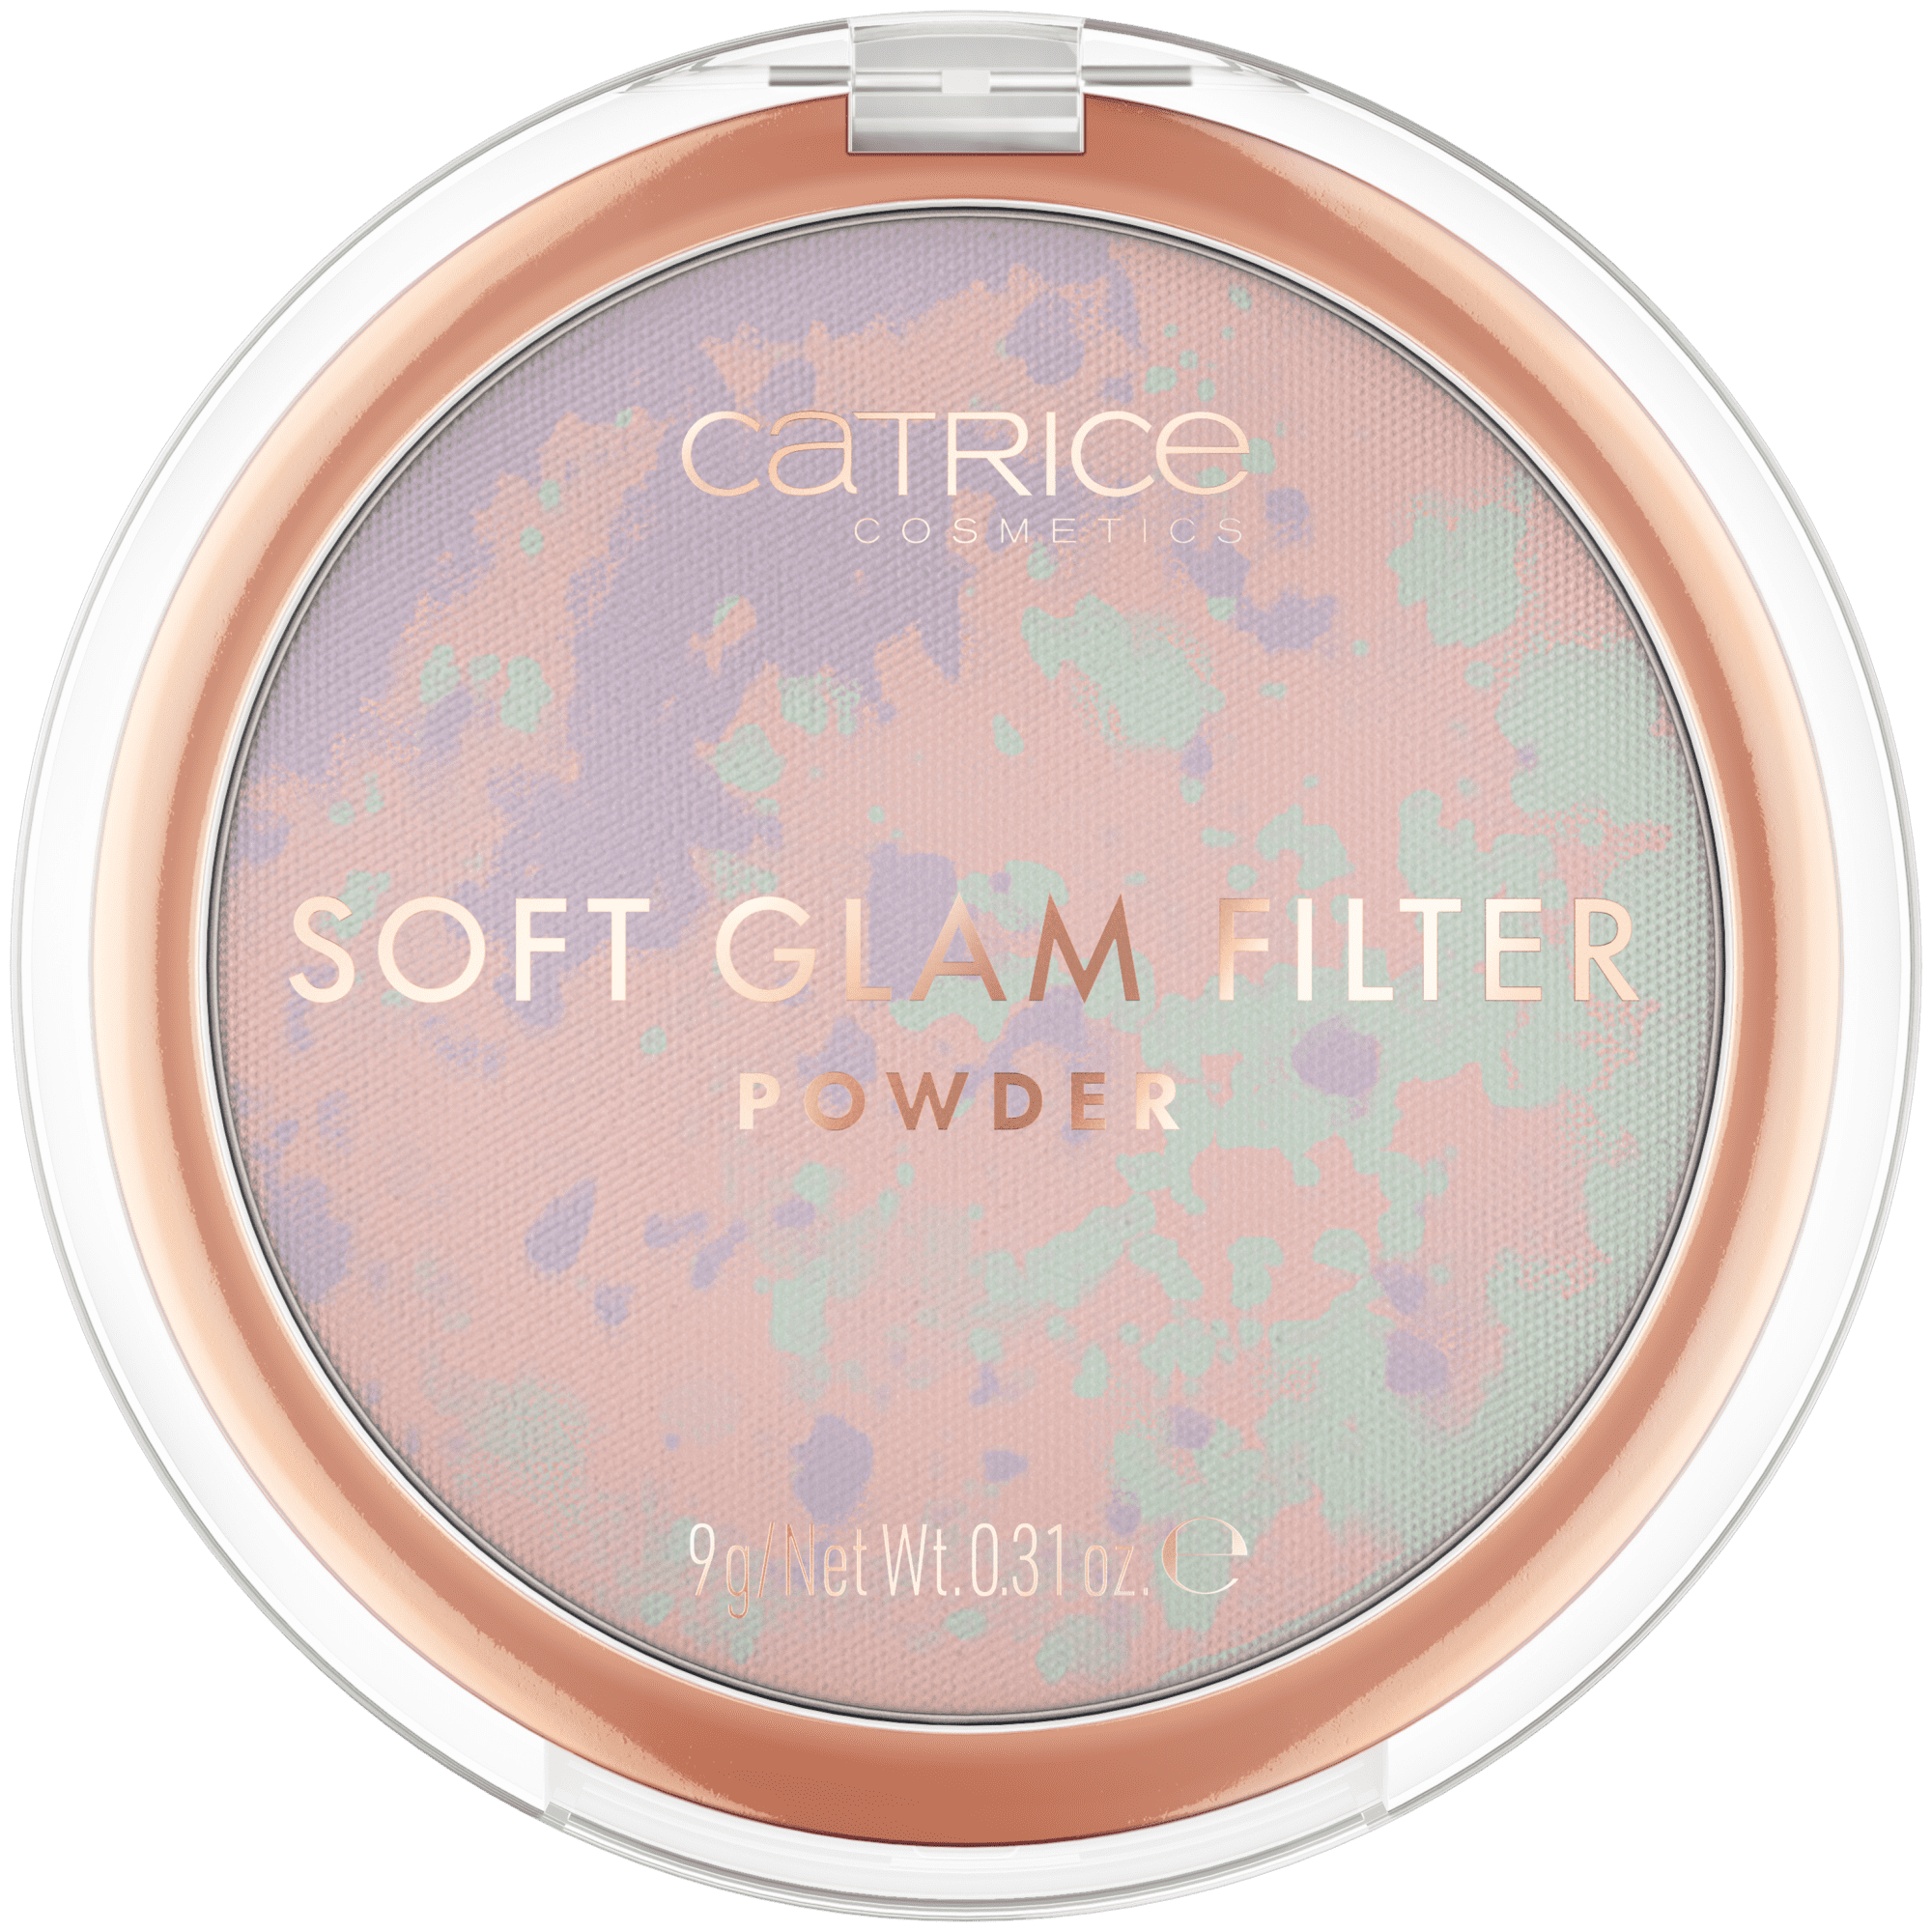 Пудра для лица 010 Catrice Soft Glam Filter, 9 гр цена и фото